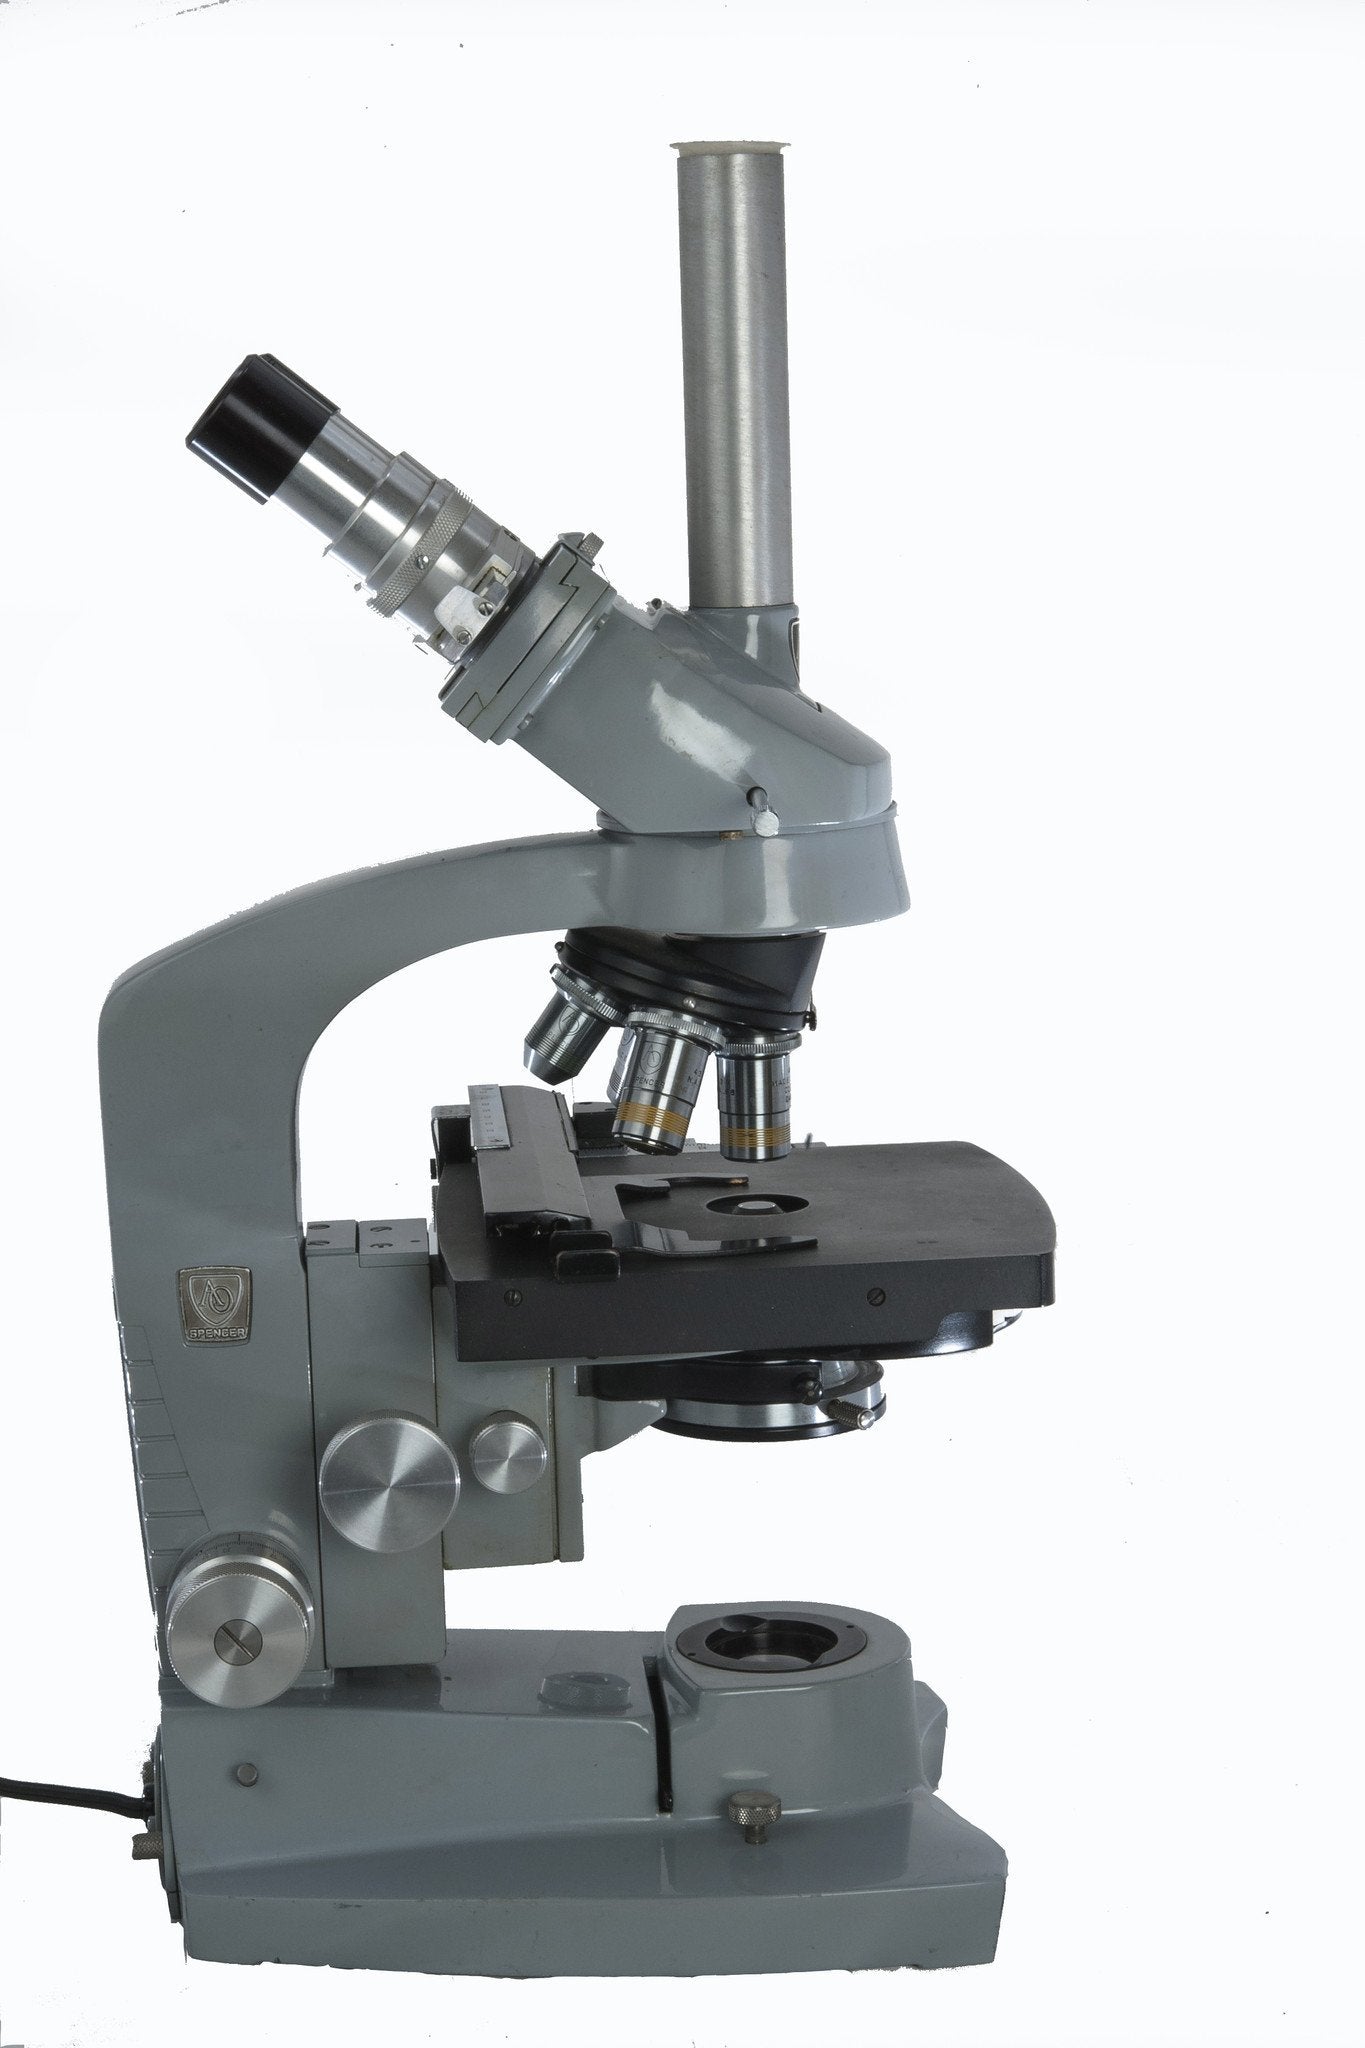 Microscope for Sale Used | AO Spencer Microscope ...